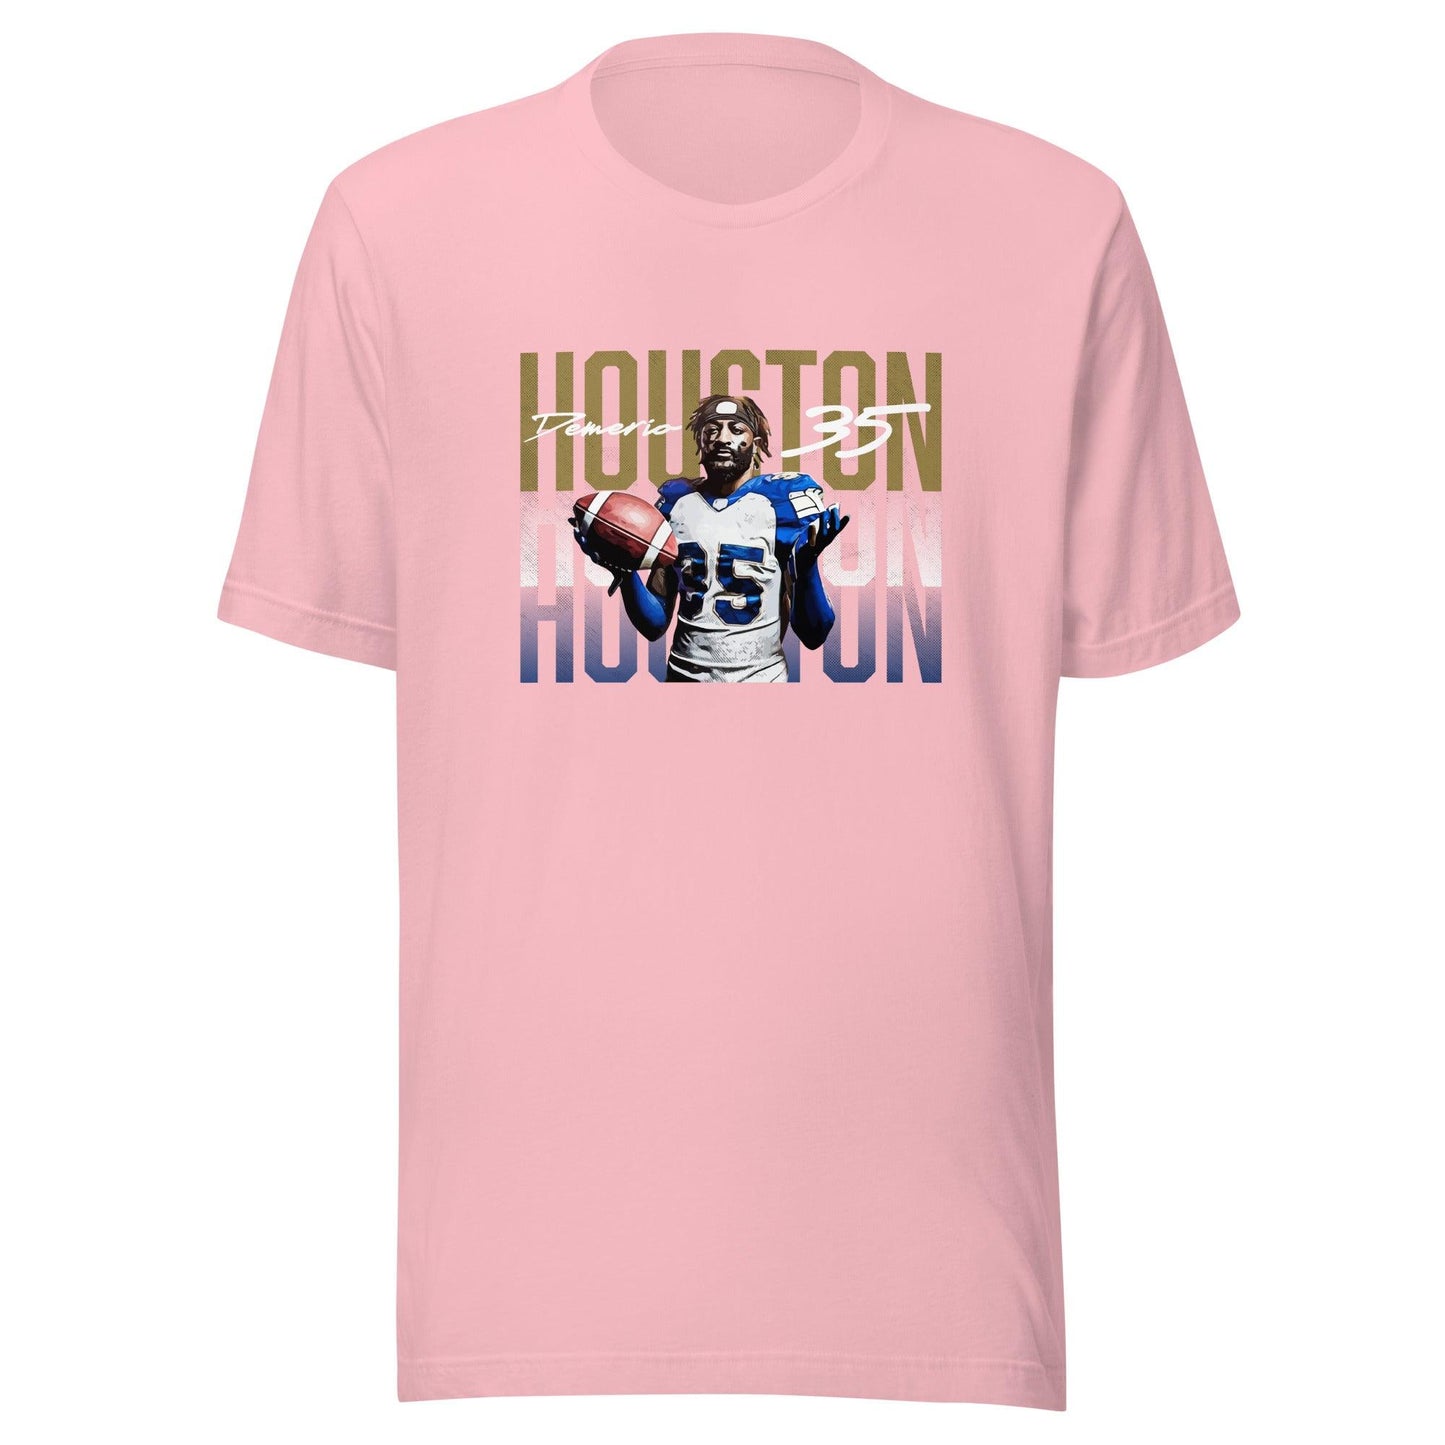 Demerio Houston "Gameday" t-shirt - Fan Arch